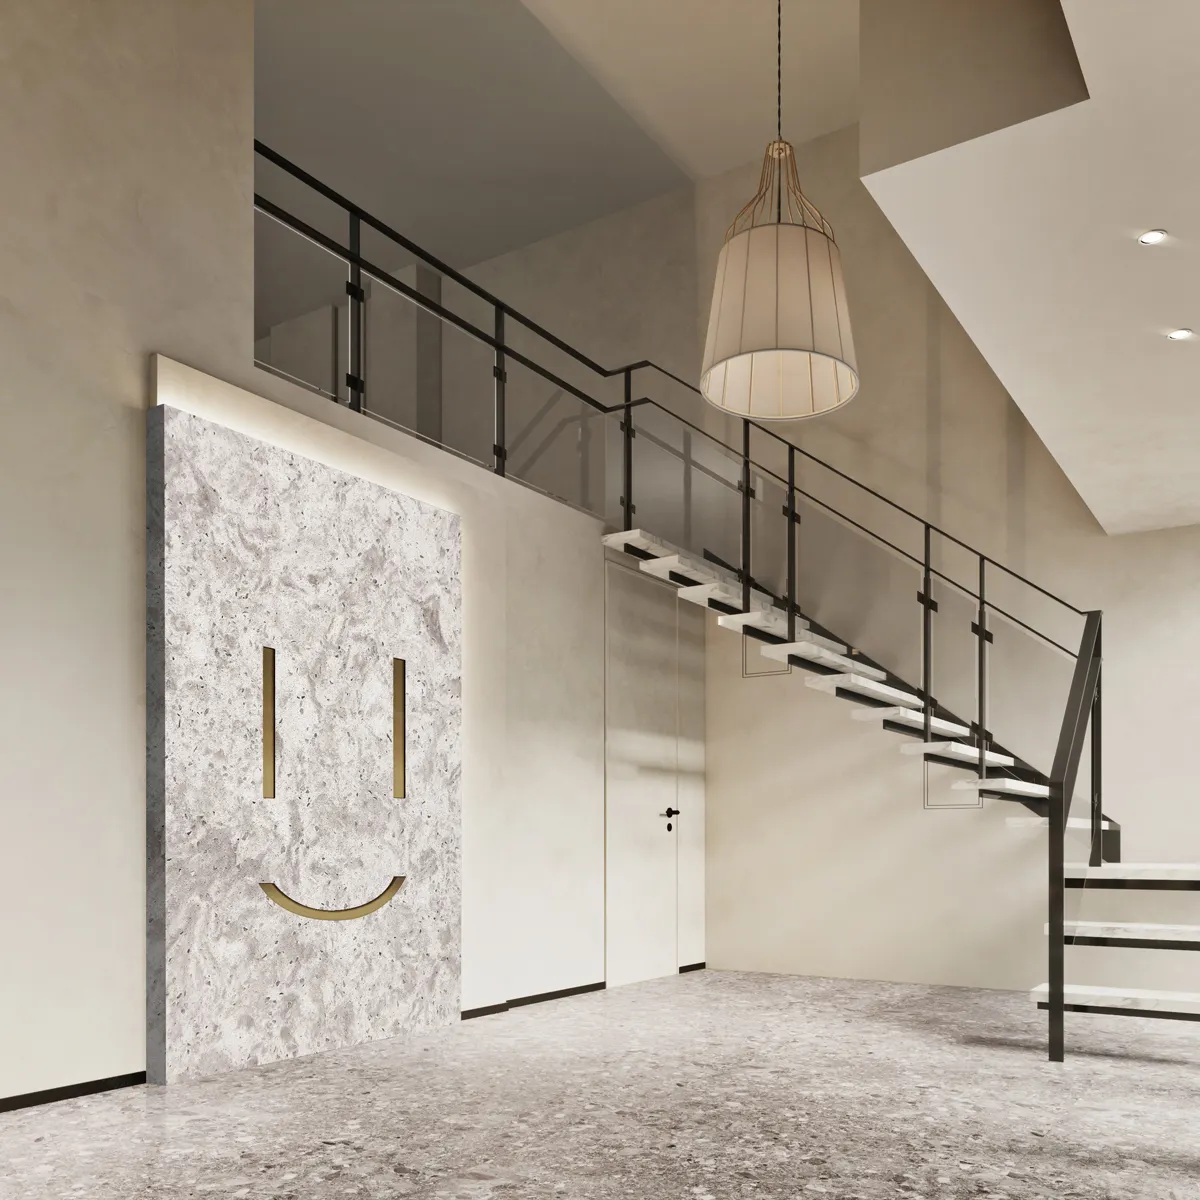 GUIYI High quality artificial marble stone artificial stone slab design granite slab floor stone